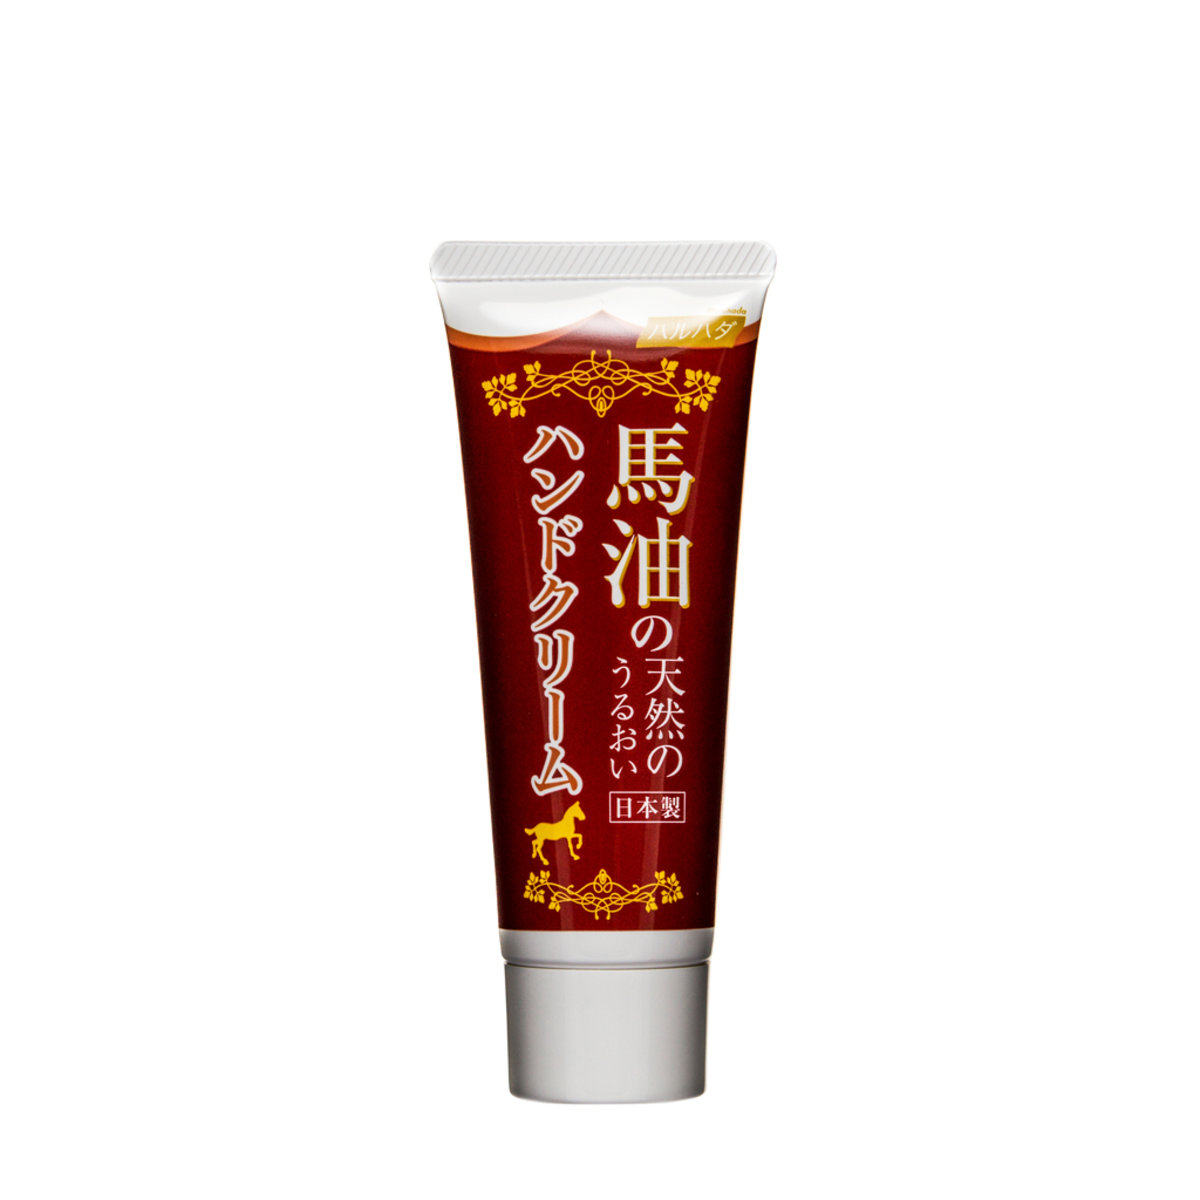 HARUHADA Horse Oil Hand Treatment Cream